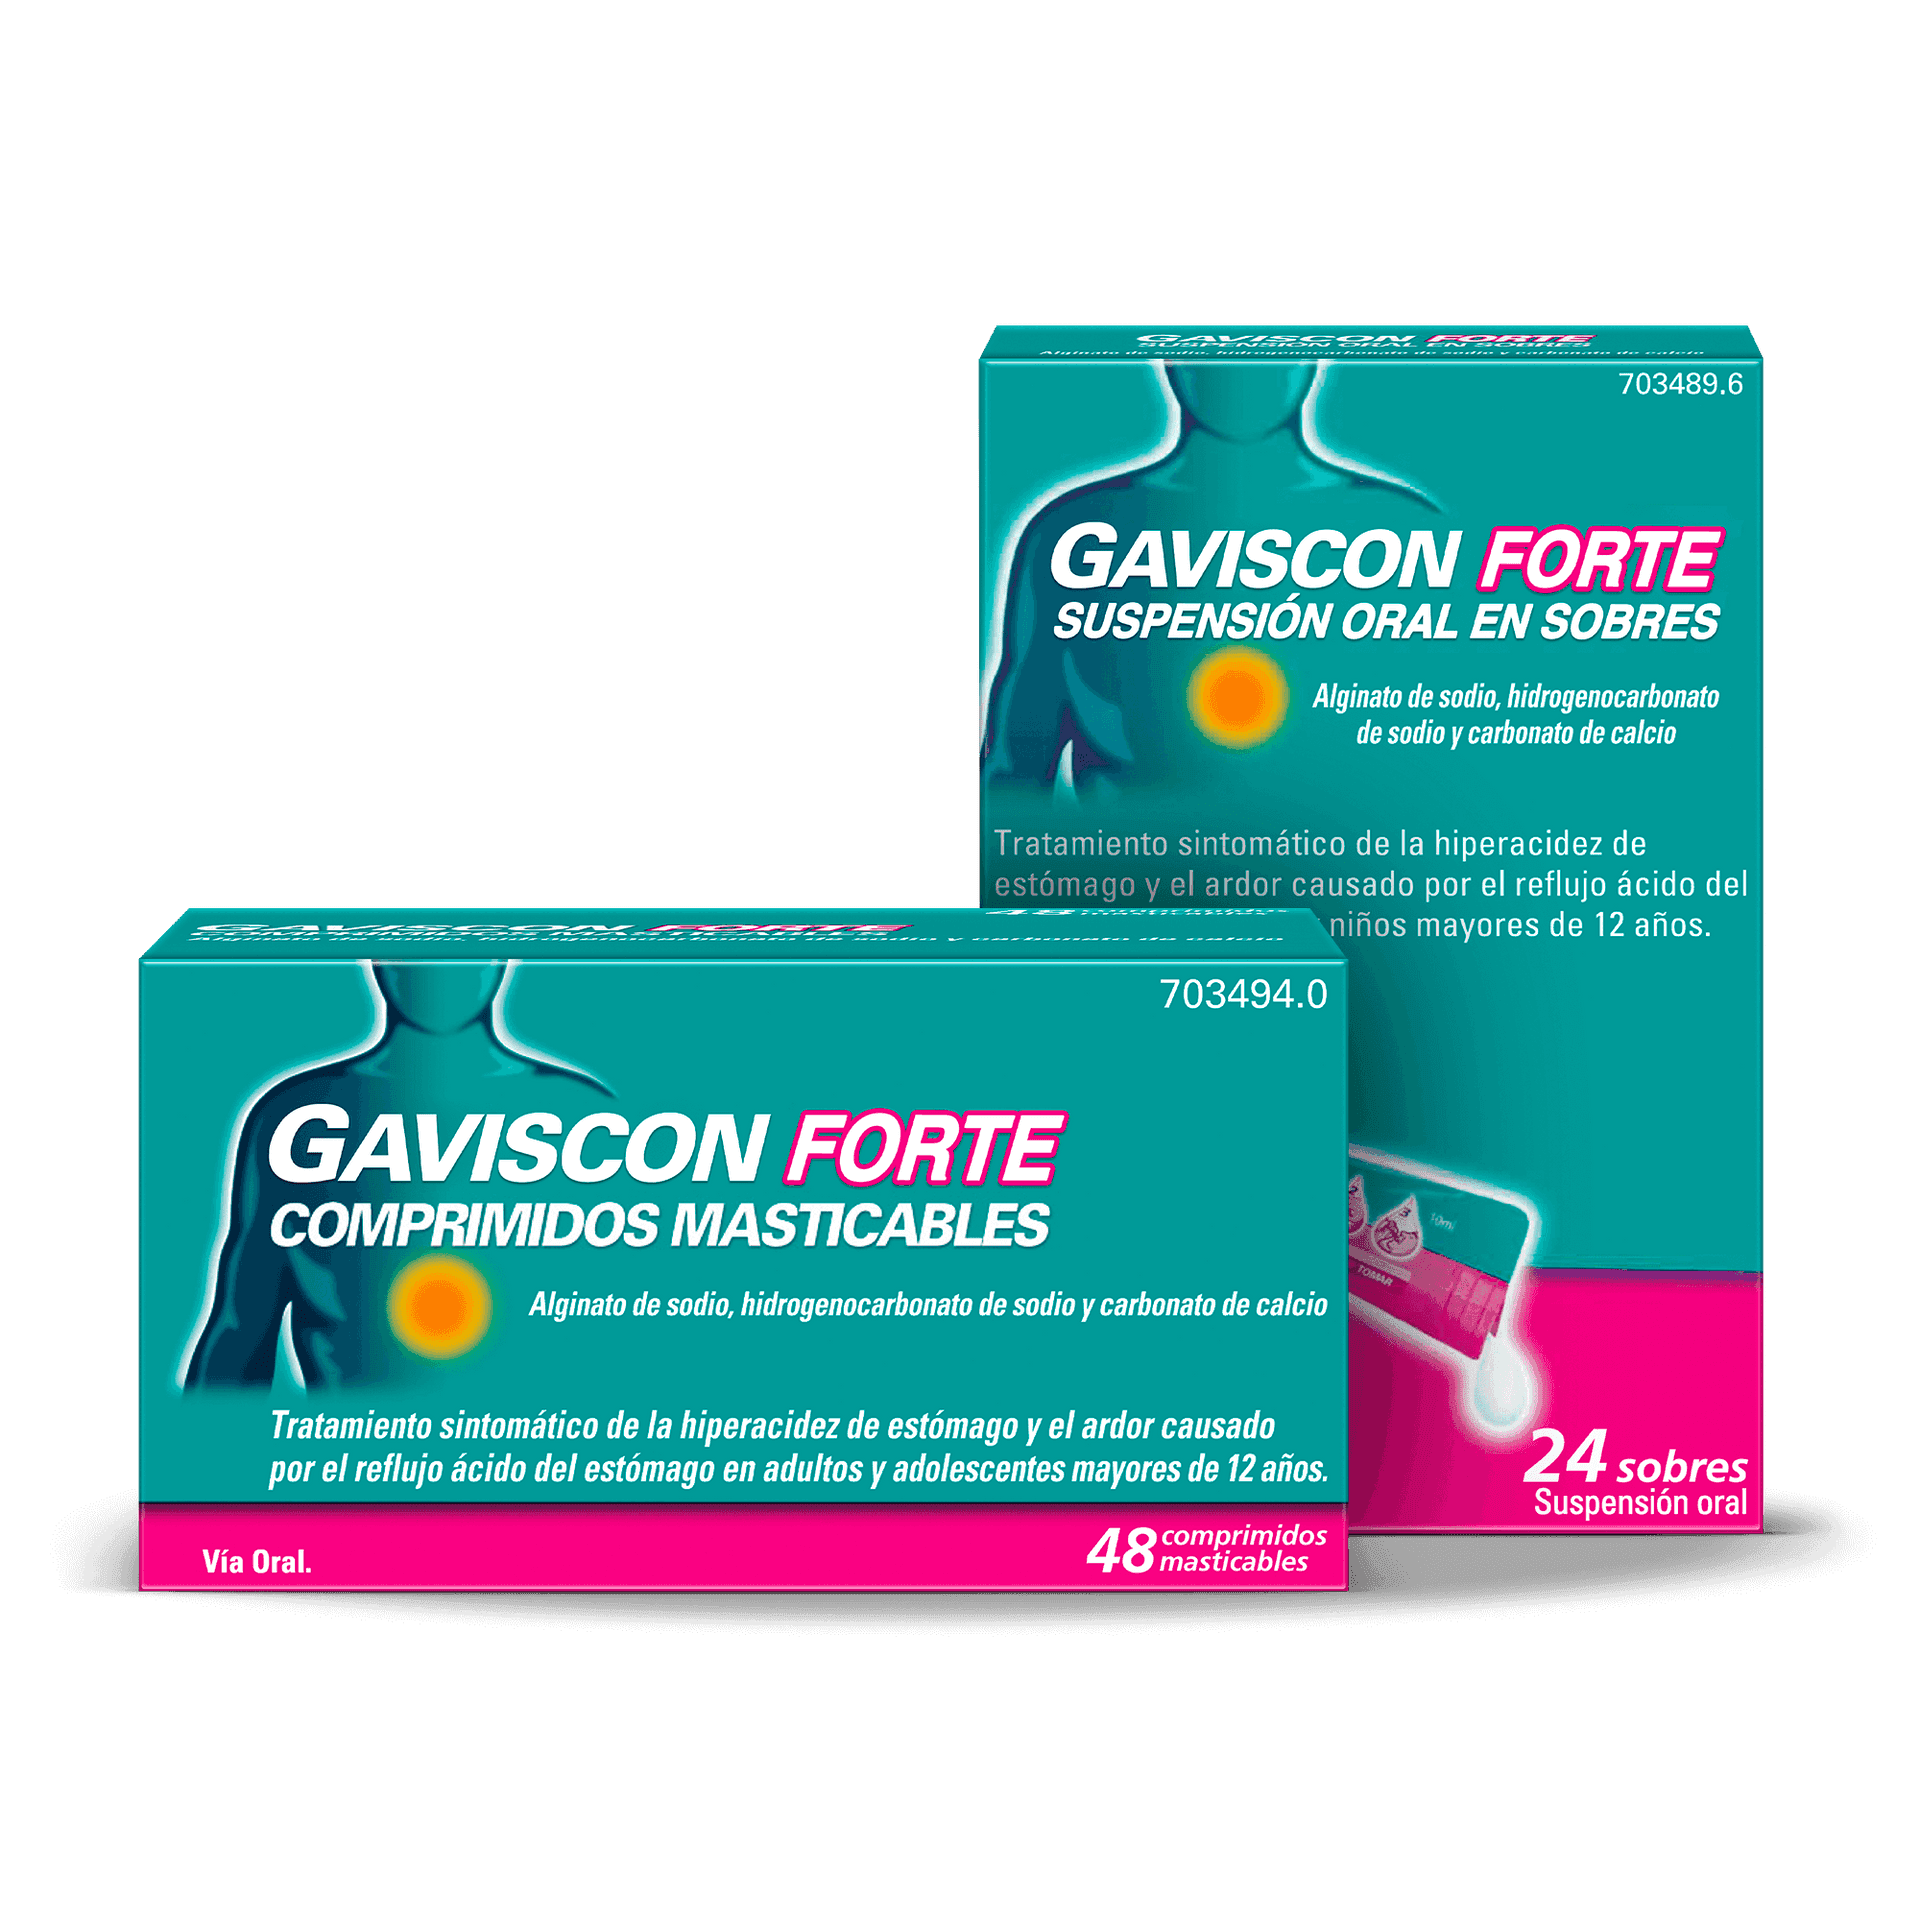 Gaviscon Forte